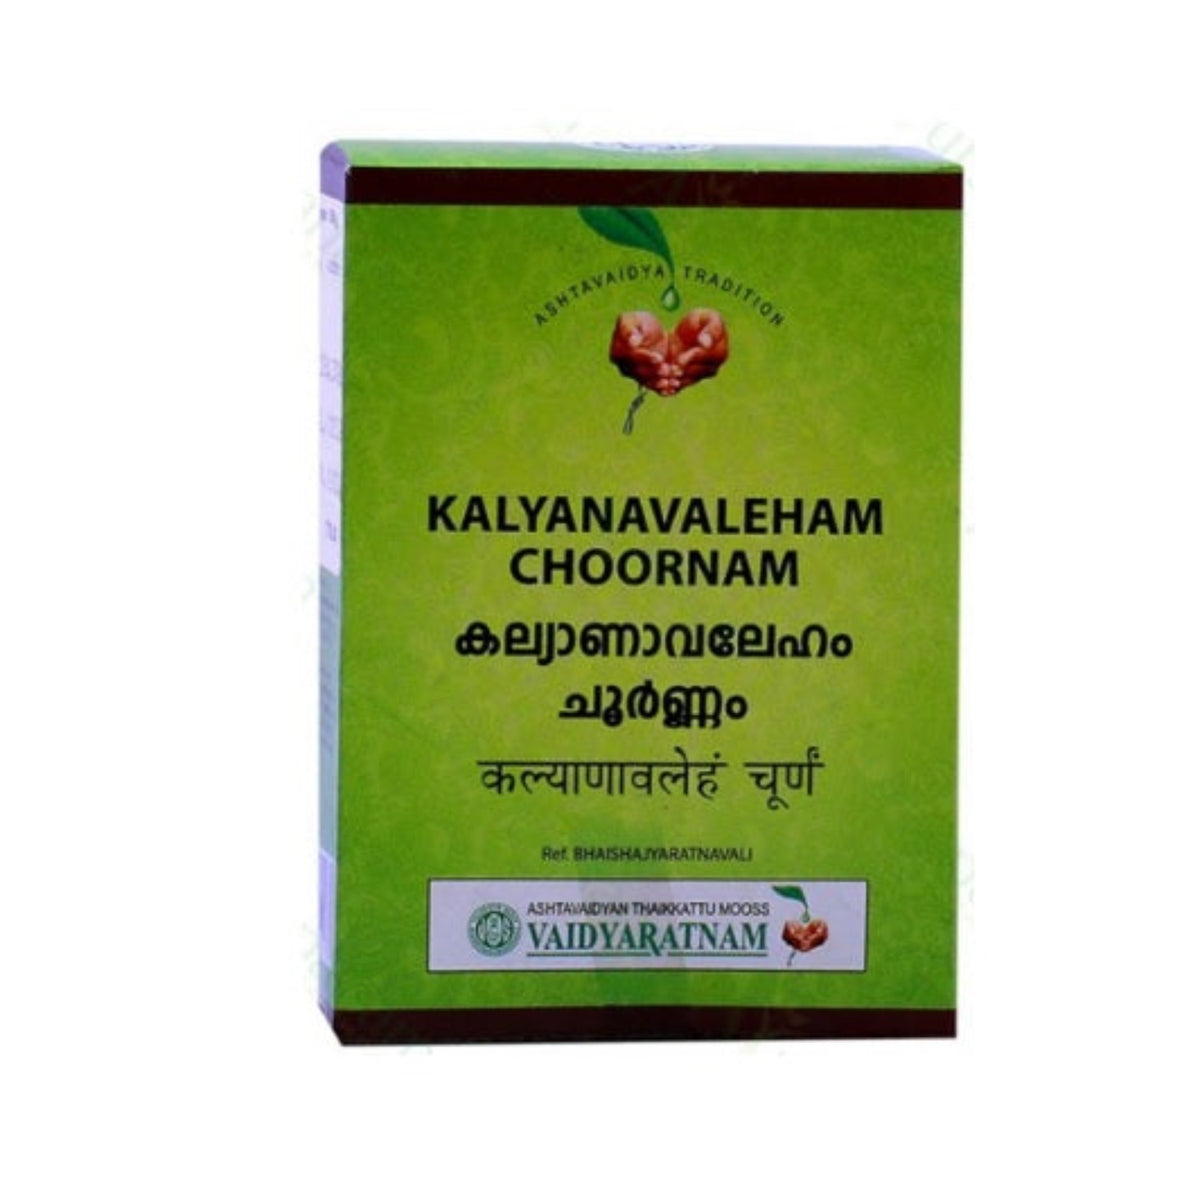 Vaidyaratnam Ayurvedic Kalyanavaleham Choornam Powder 100g